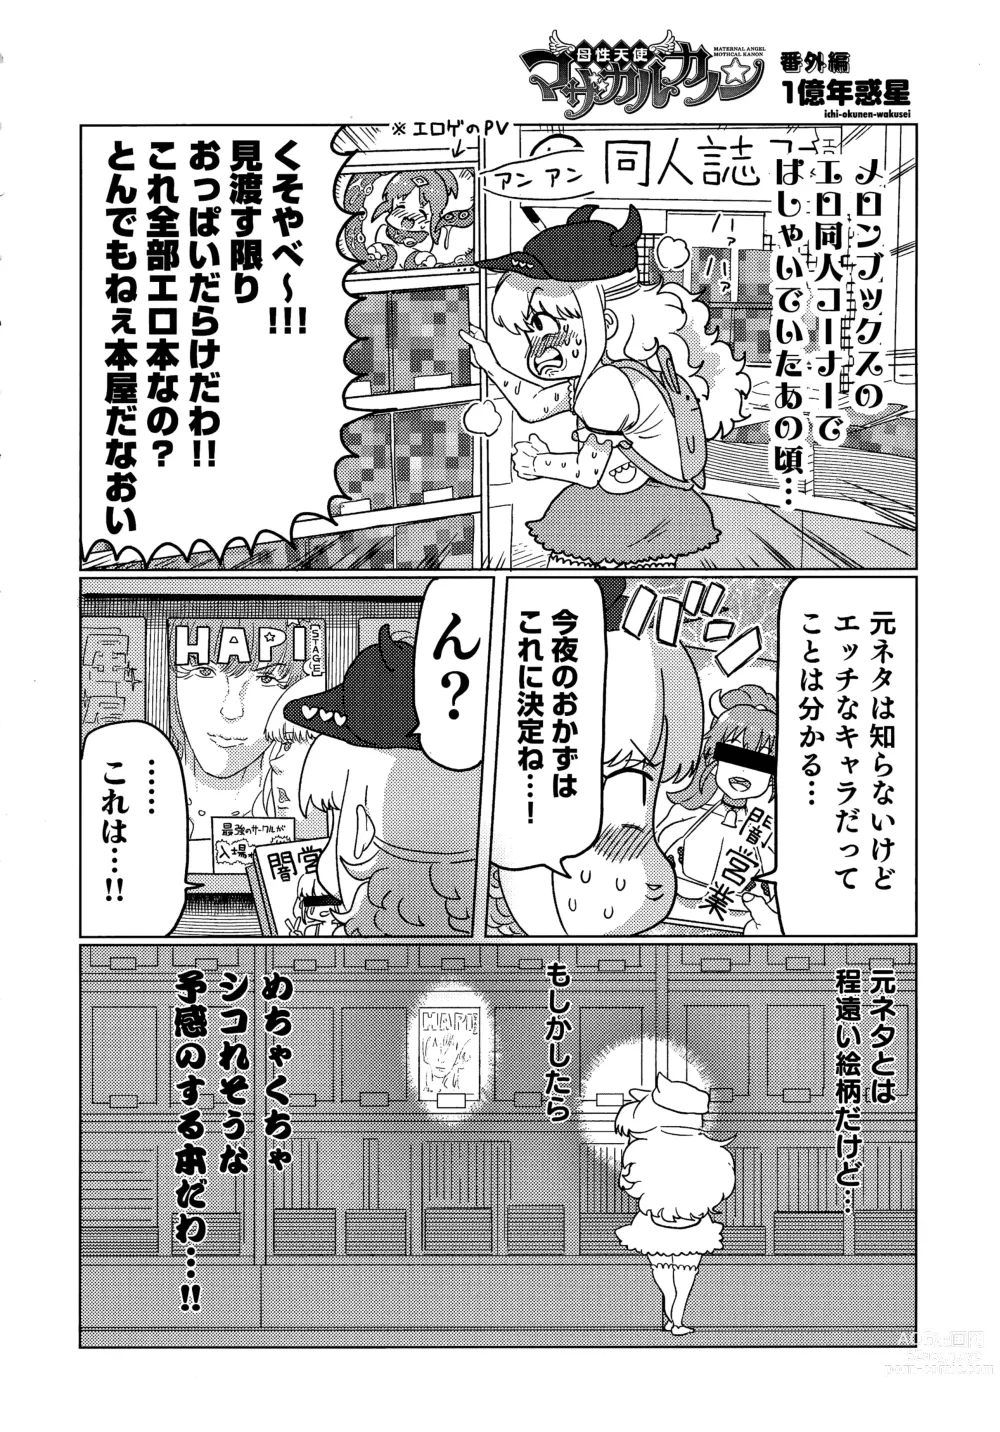 Page 101 of manga HotMilk Festival All Star Comic